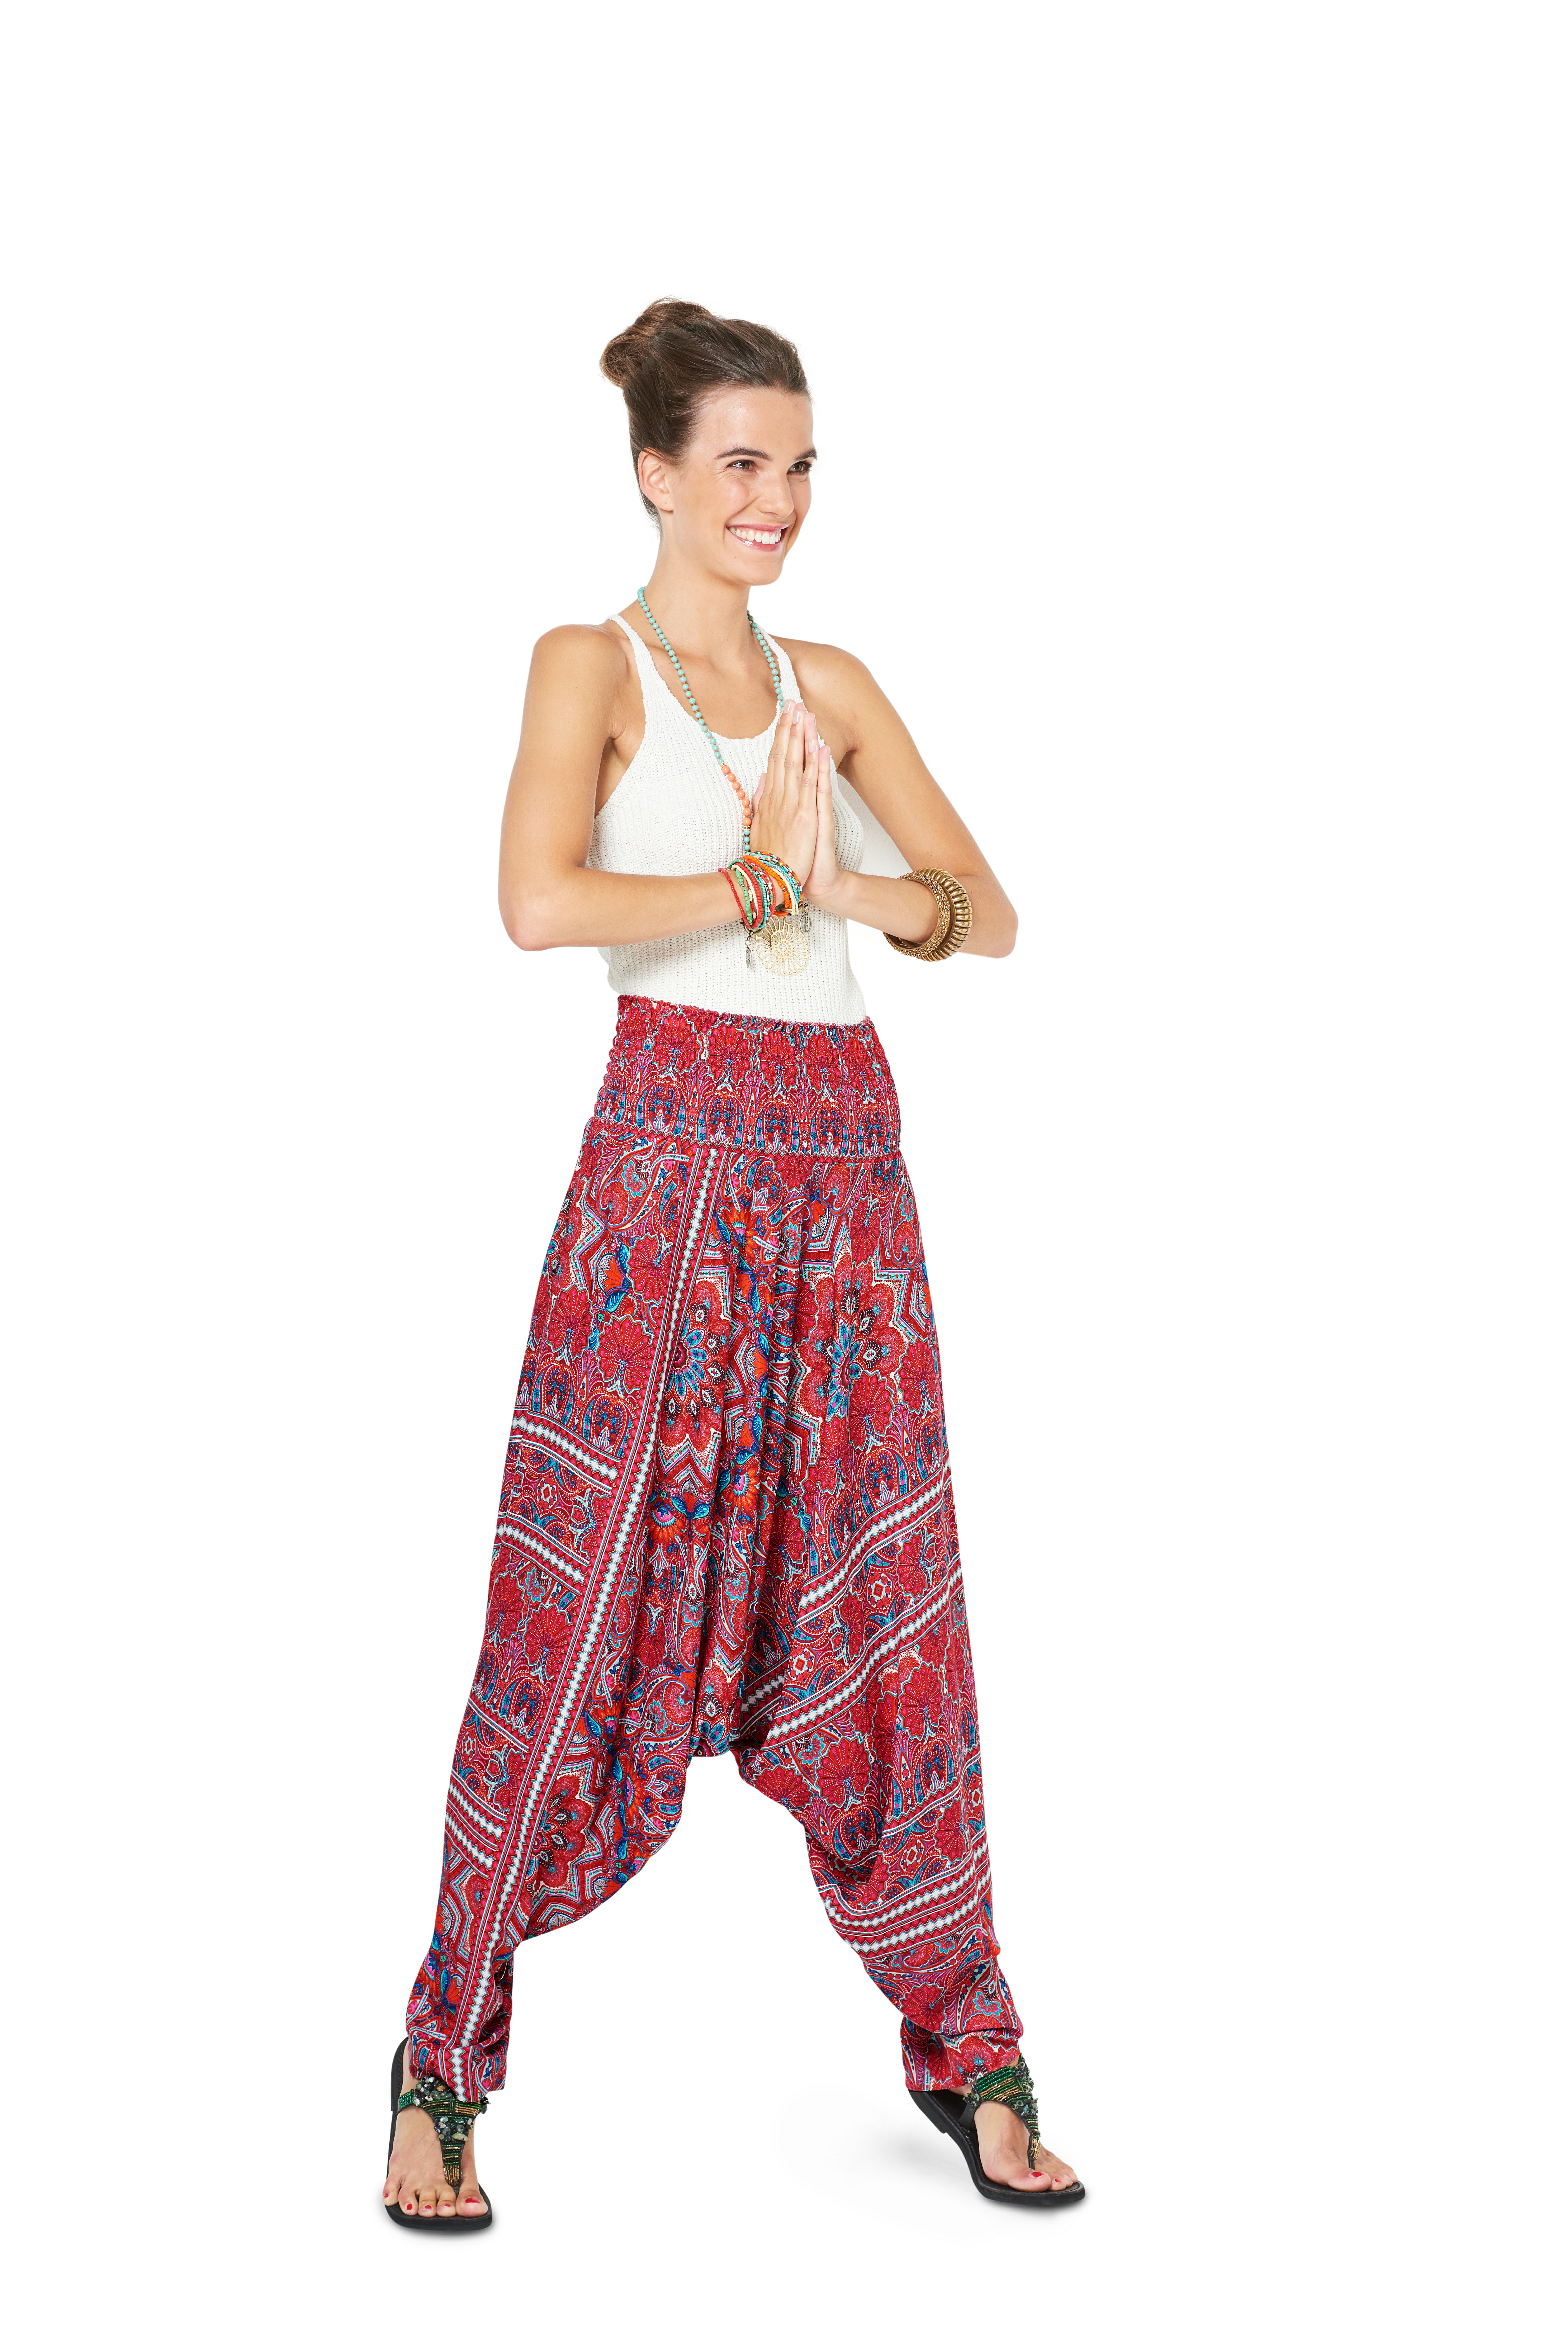 Joob Joob Boho Pants for Women - Flowy Loose Harem Hippie Pants - Casual  Yoga Bohemian Joggers Comfy Lounge Pajamas - Green Medium at Amazon Women's  Clothing store